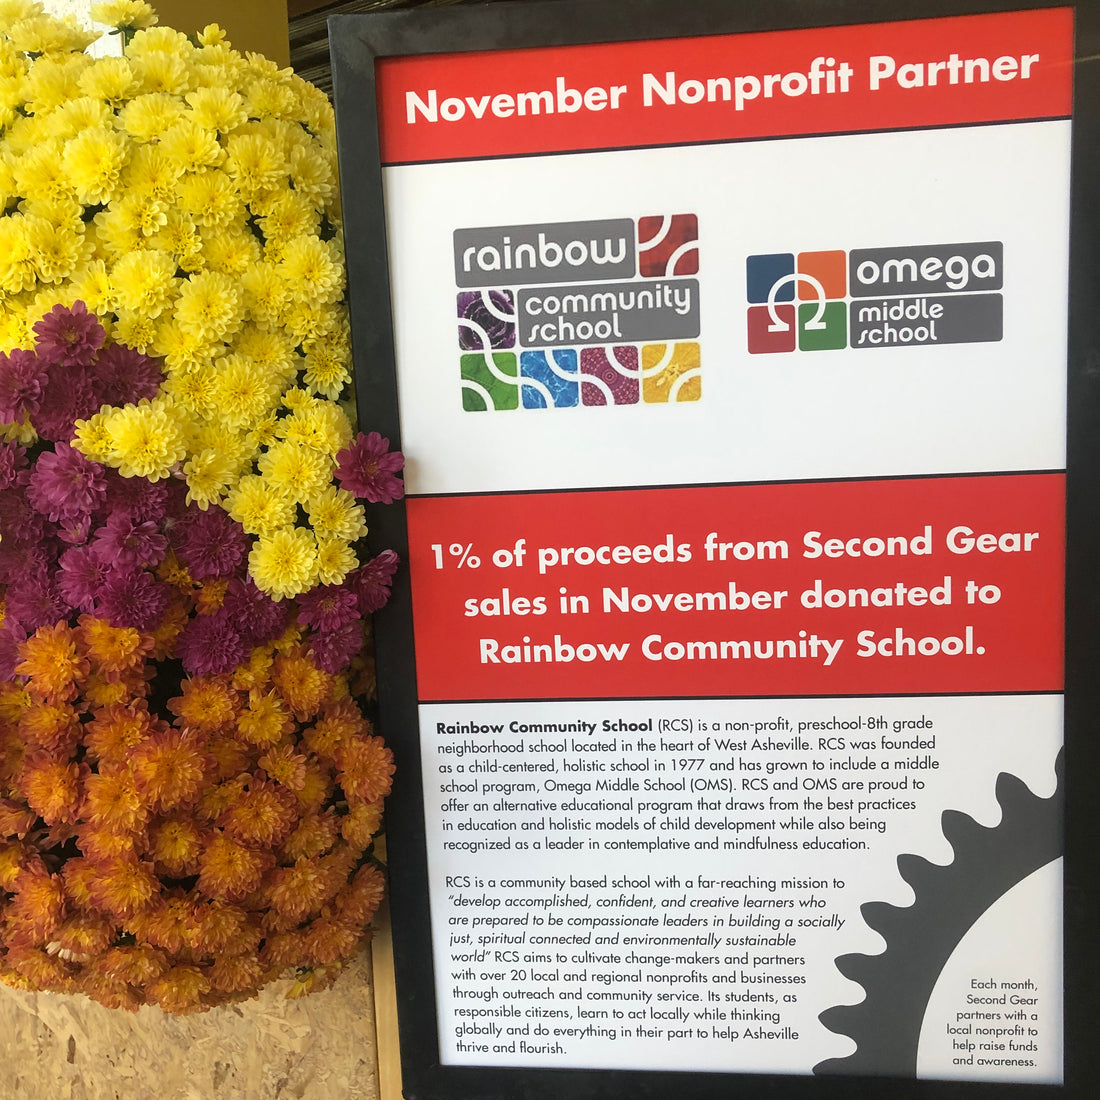 Second Gear's November Non-Profit: Rainbow Community School